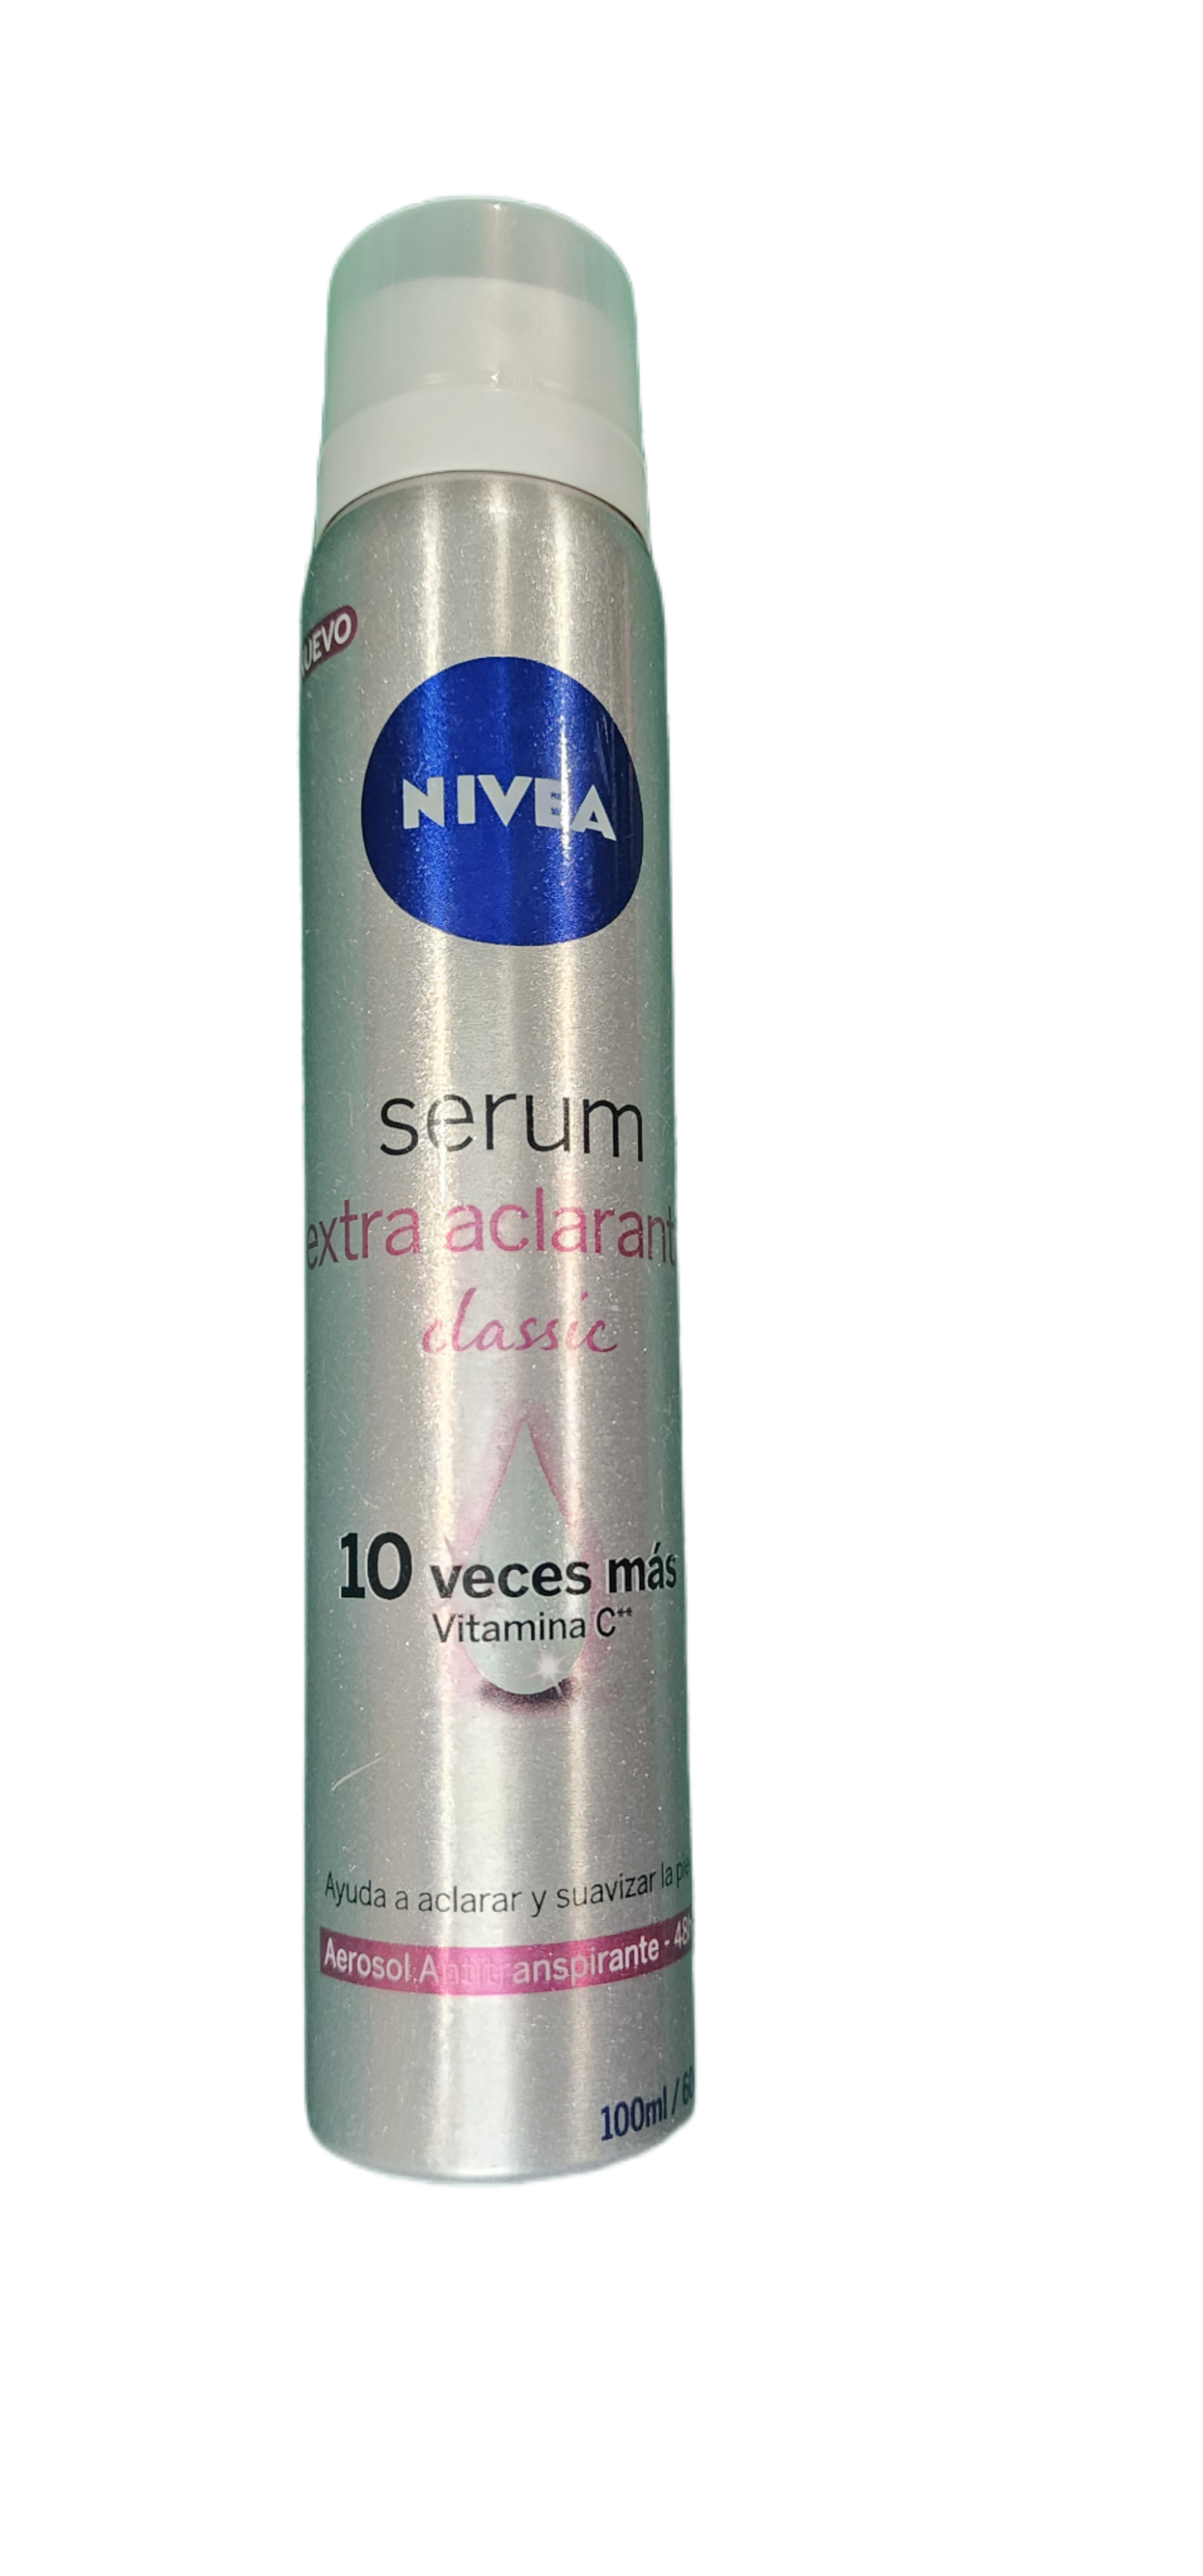 Nivea Serum Spray 10 veces mas vitamina C Extra aclarante